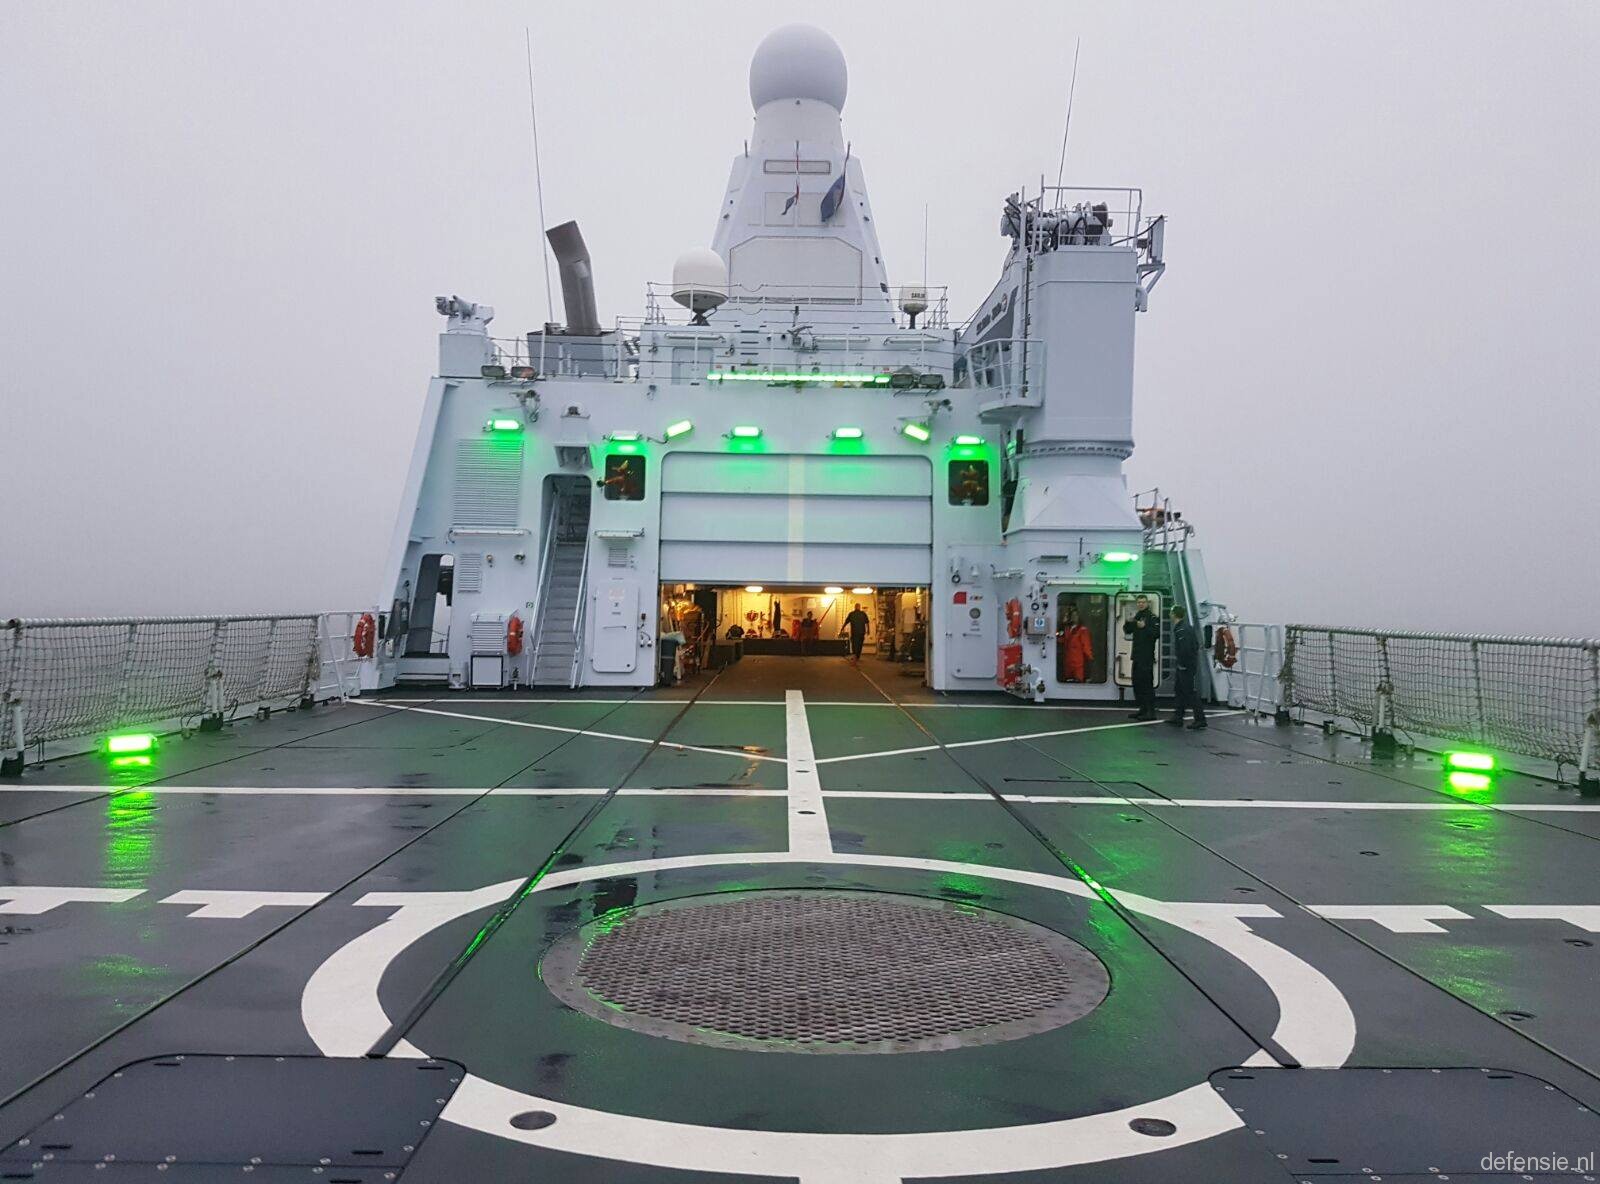 p-841 hnlms zeeland holland class offshore patrol vessel opv royal netherlands navy 15